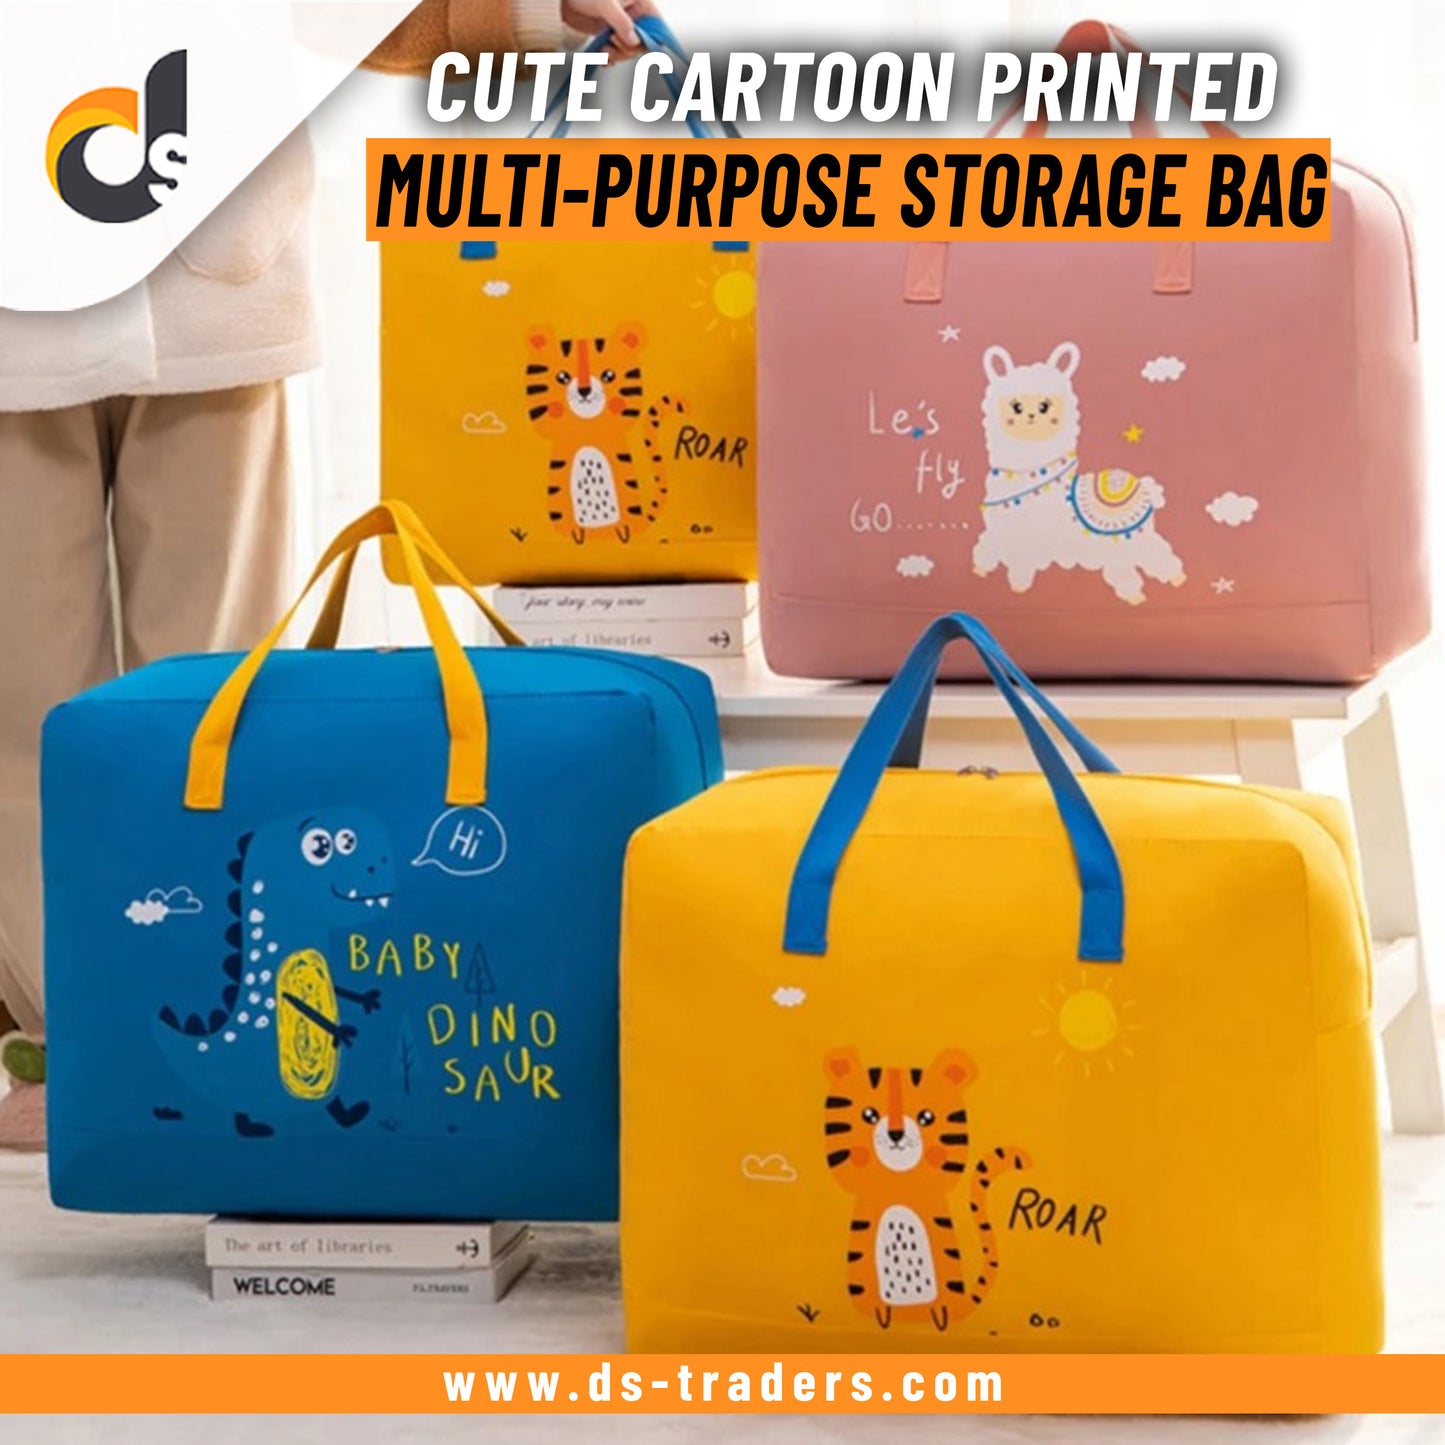 Cute Cartoon Printed Multi-Purpose Storage Bag